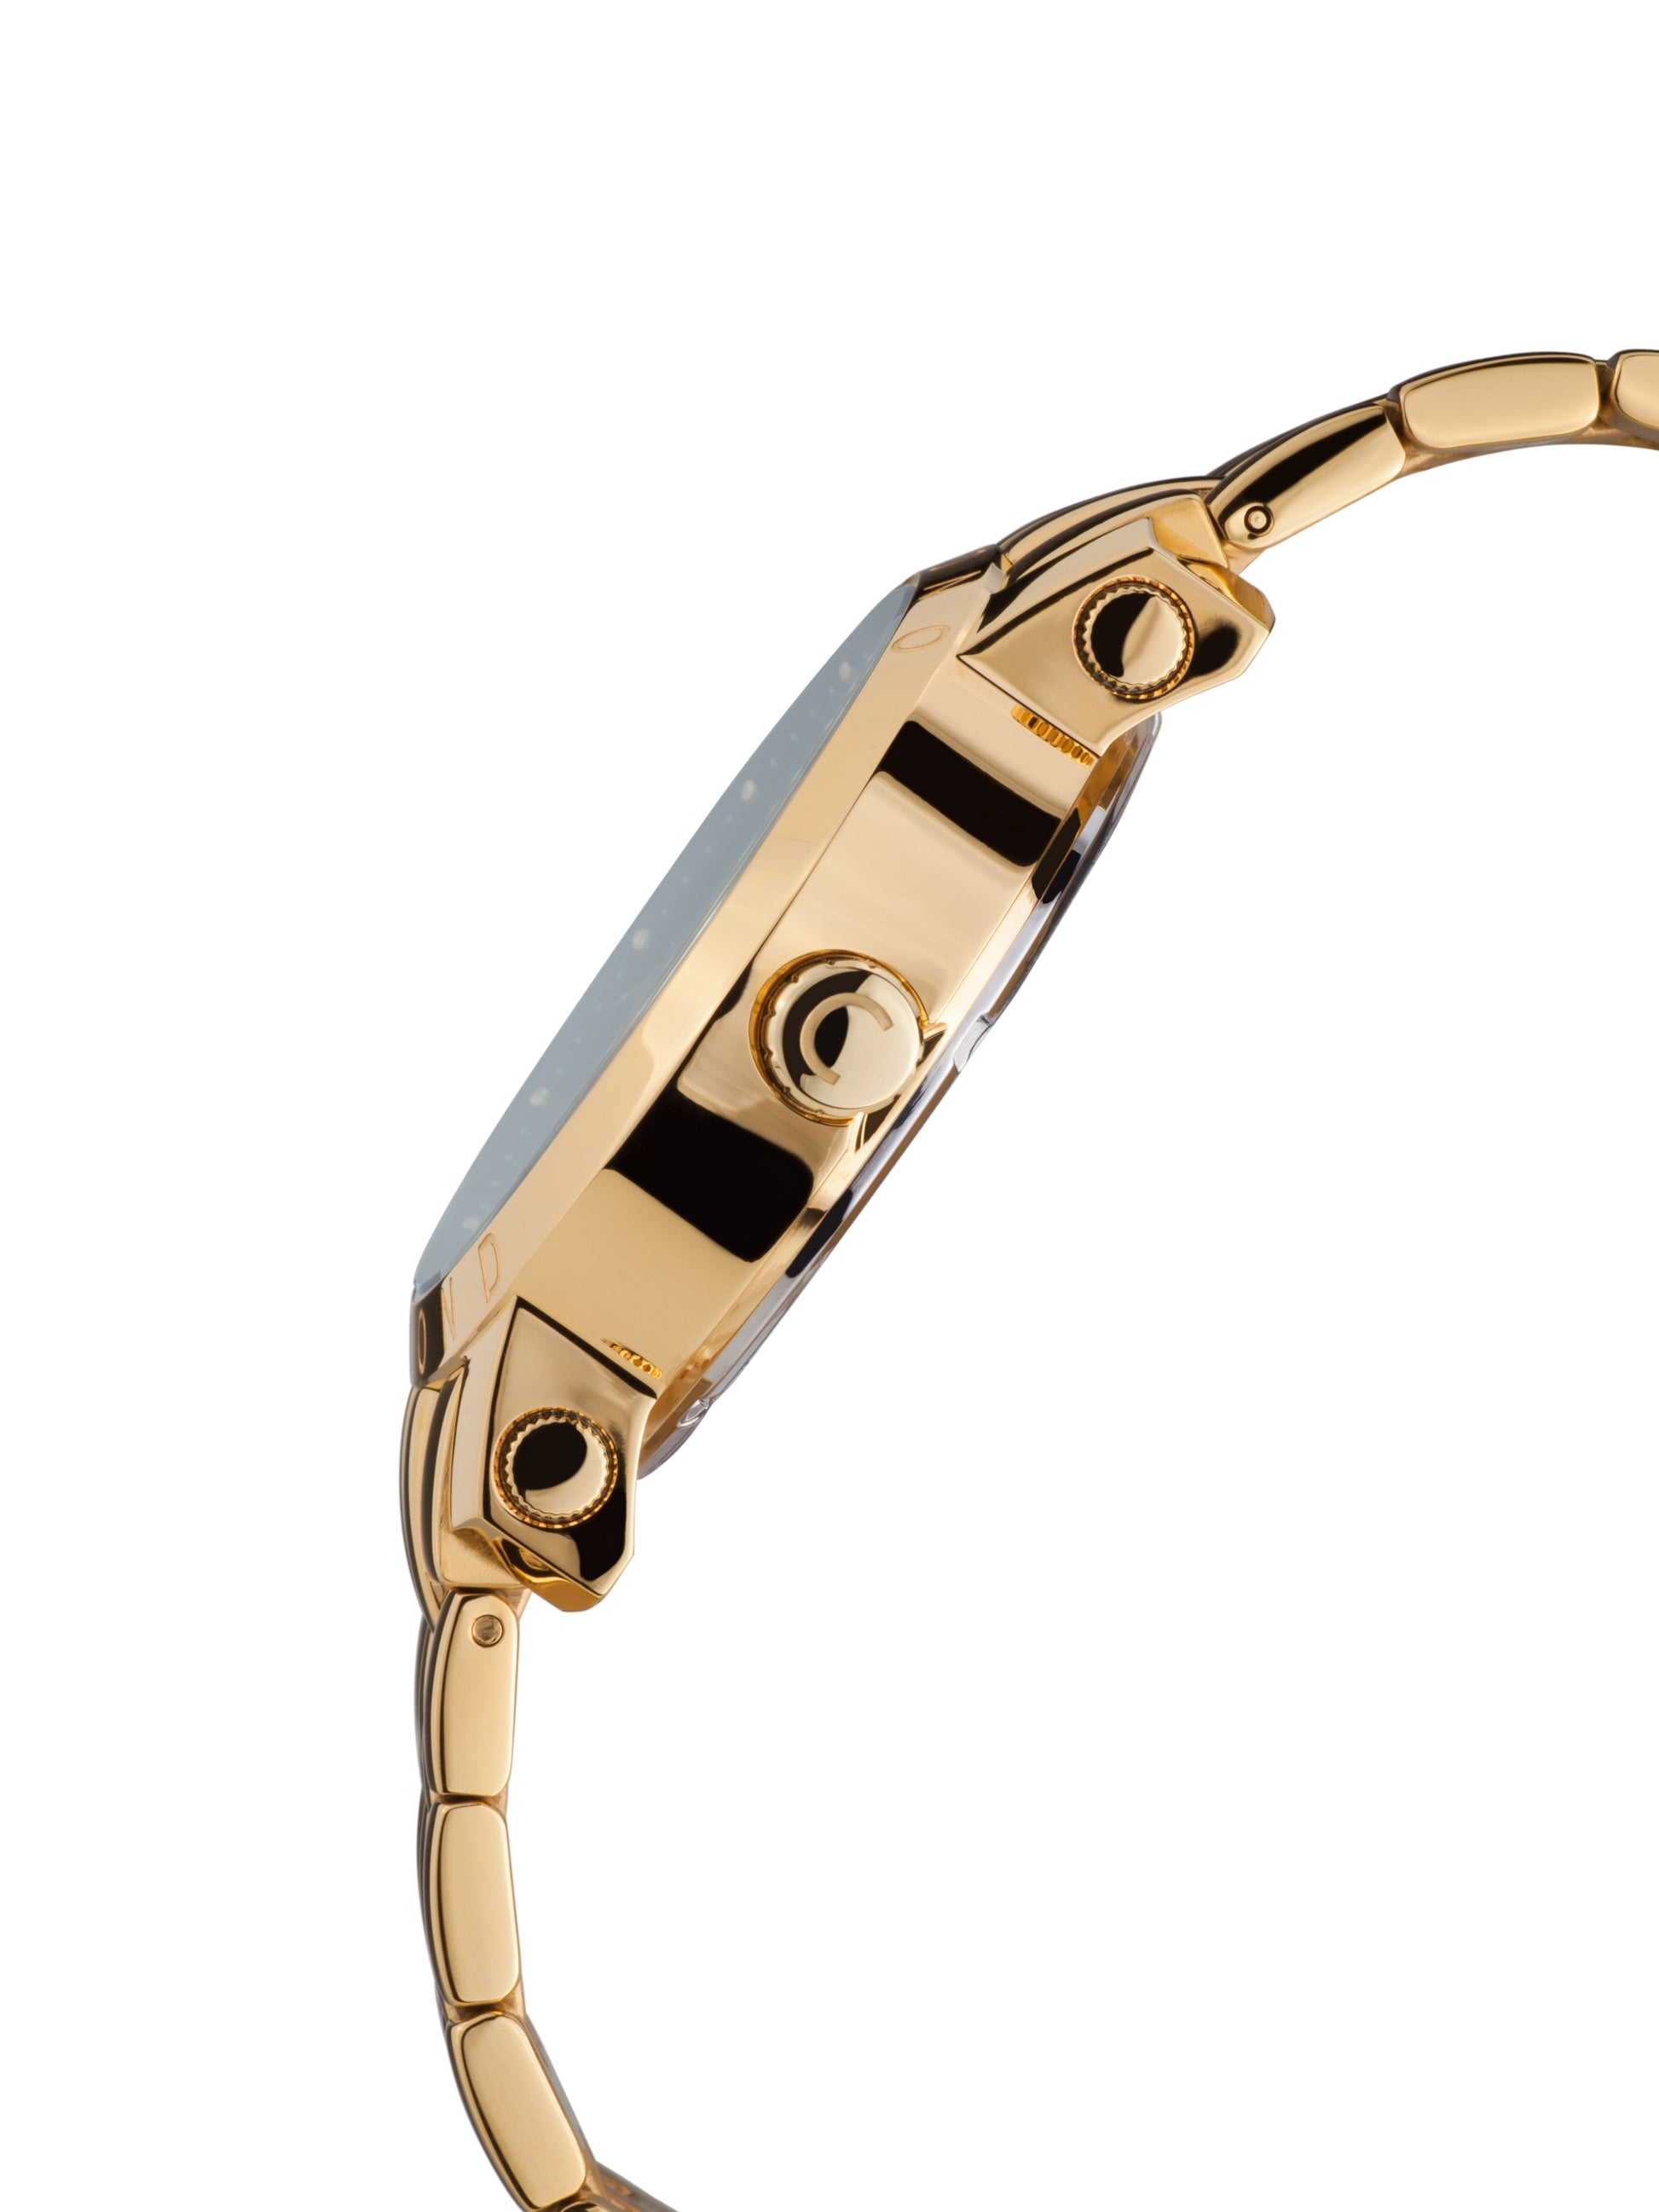 Automatic watches — Nestorius — Chrono Diamond — gold IP black